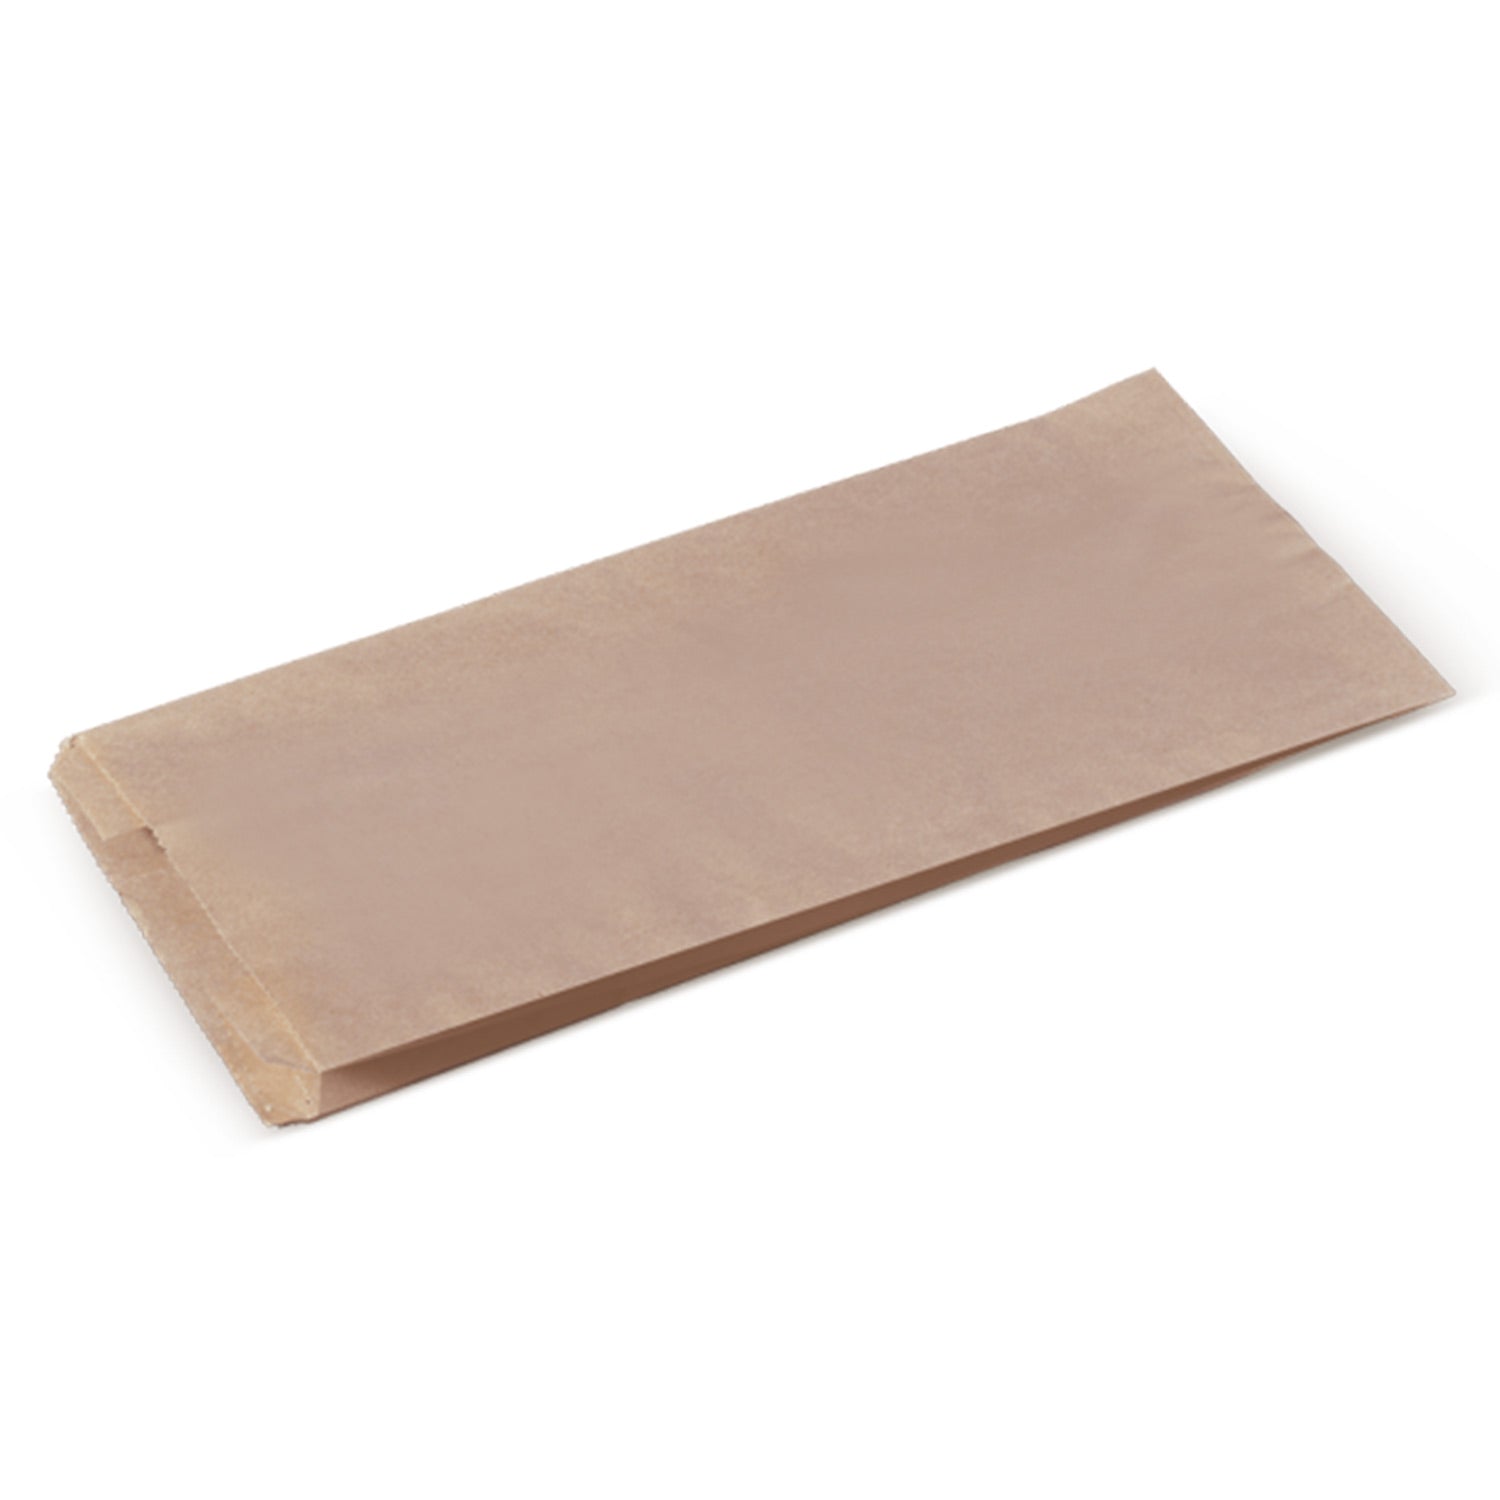 Detpak Bag Satch #6 Paper Brown 346x150x85mm - PK/500 Packaging, Bags & Films  